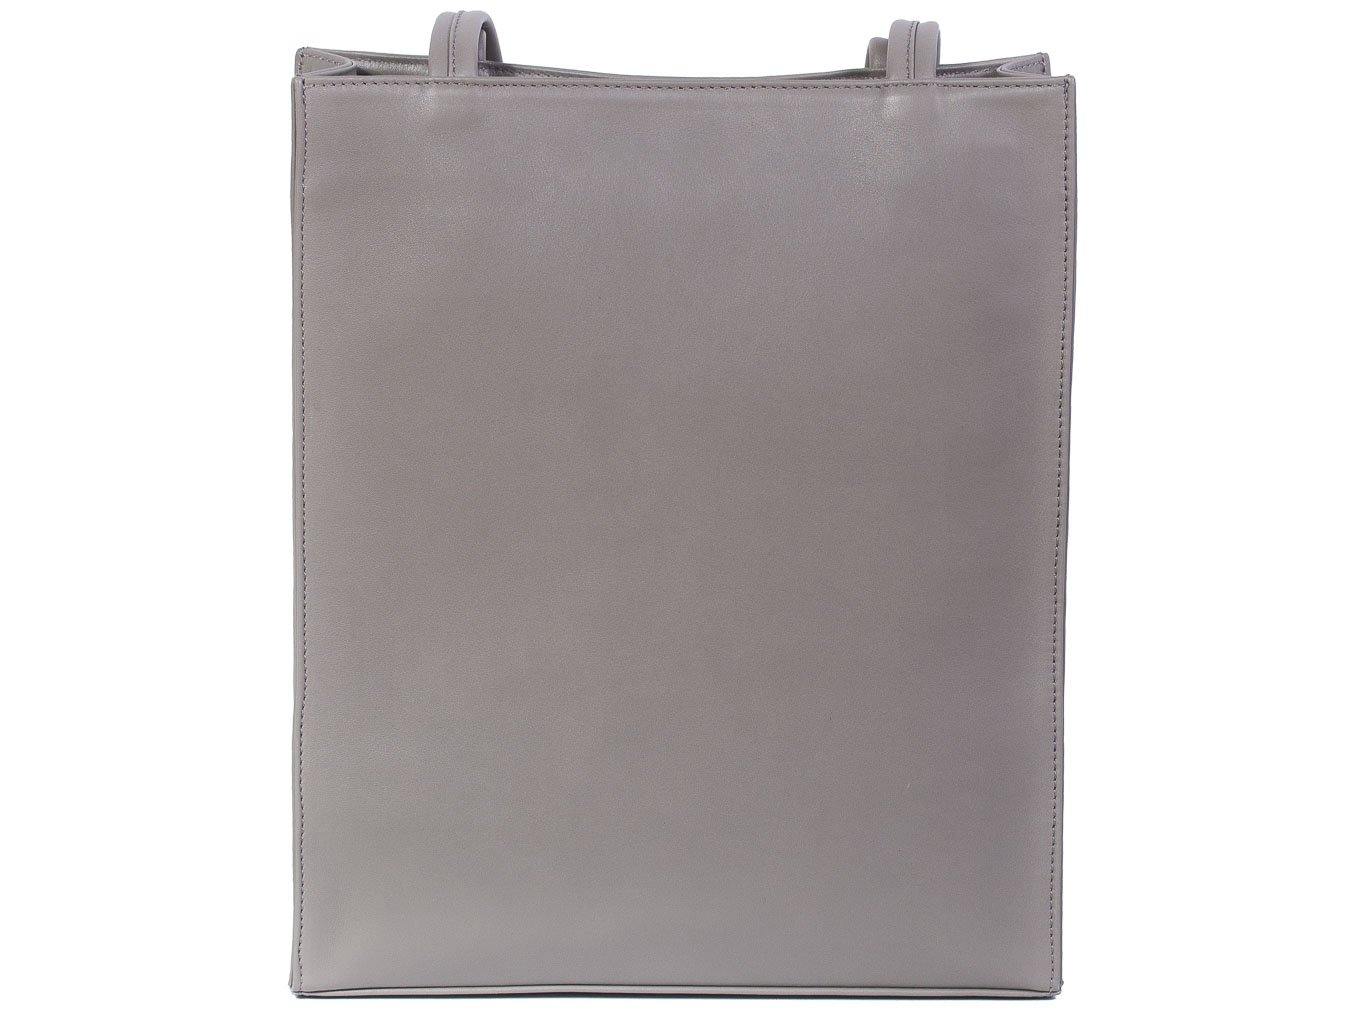 Tote Springbok Handbag in Slate Grey with a stripe feature by Sherene Melinda back